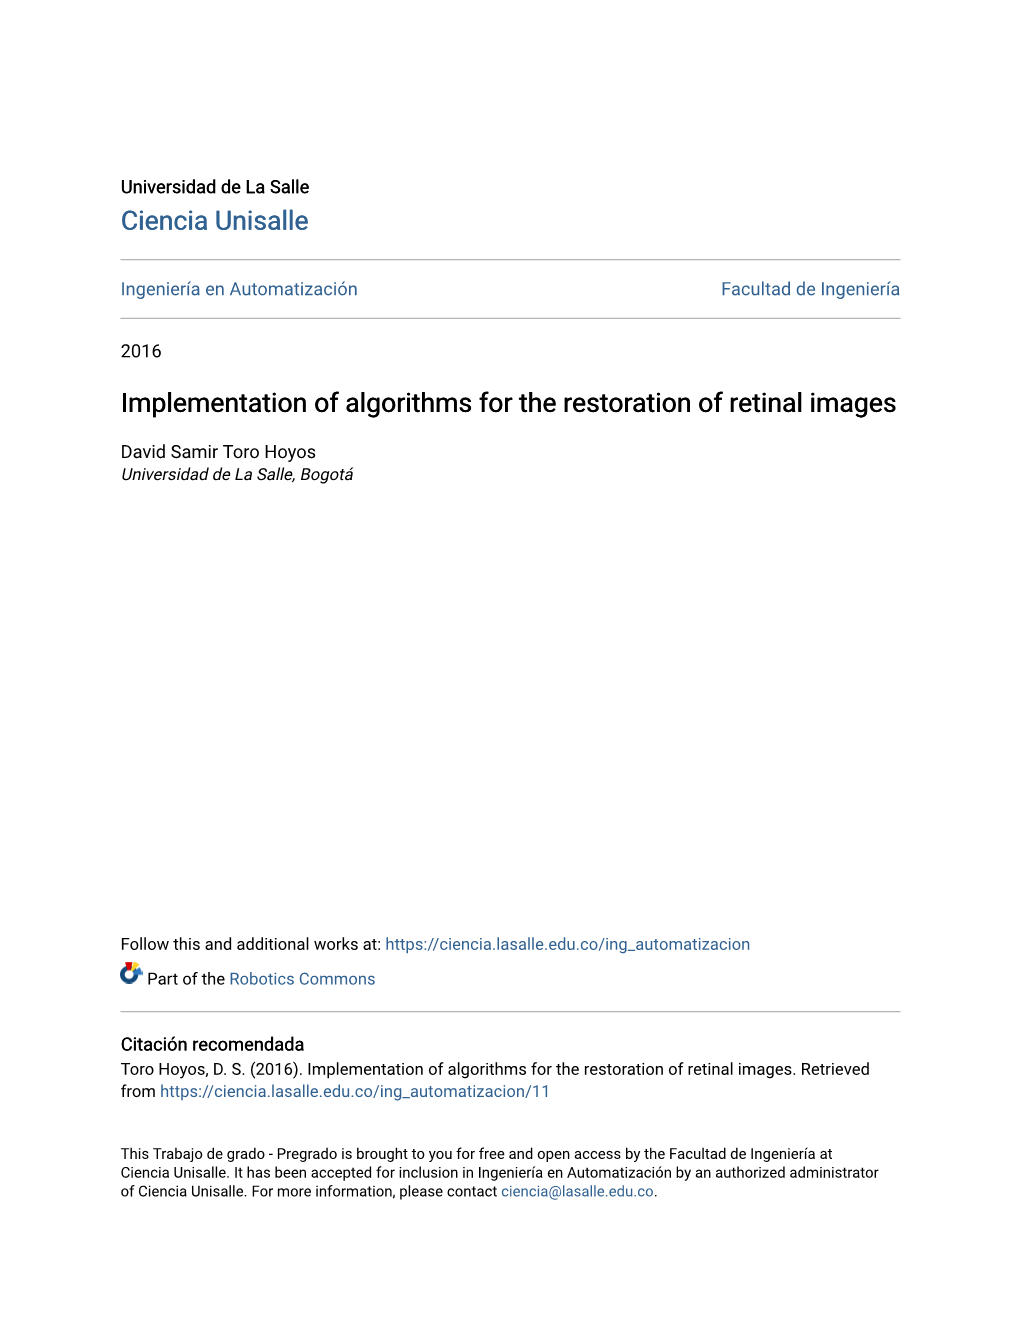 Implementation of Algorithms for the Restoration of Retinal Images